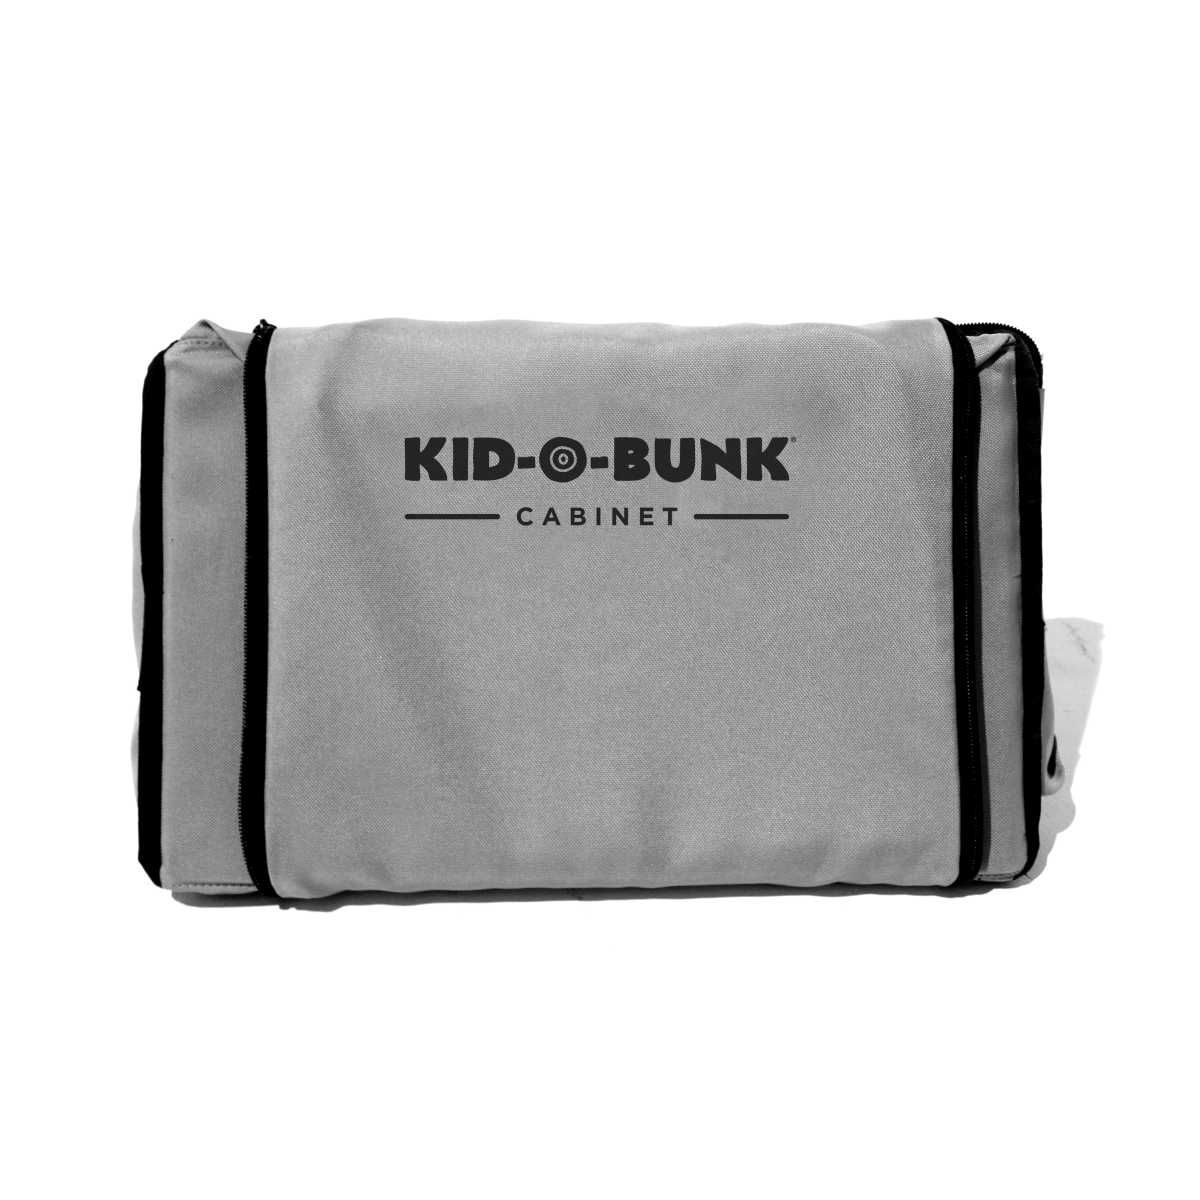 Disc-O-Bed Cabinet Garderobe grau -Kid-O-Bunk-  - 50053